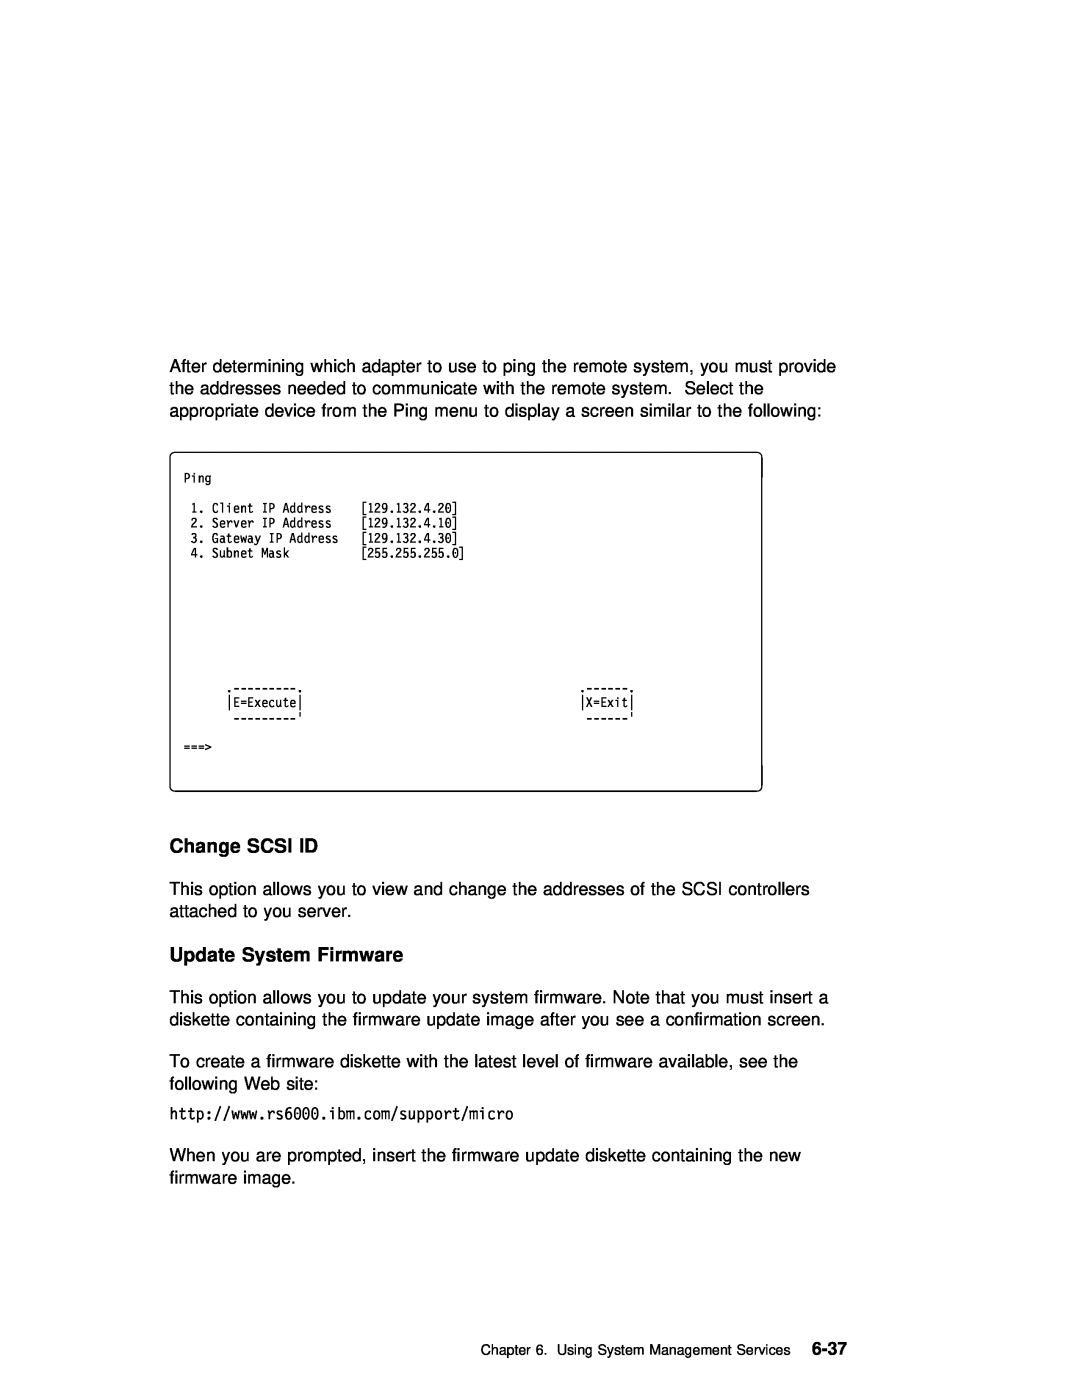 IBM B50 manual Change SCSI ID, Update System Firmware, 6-37 